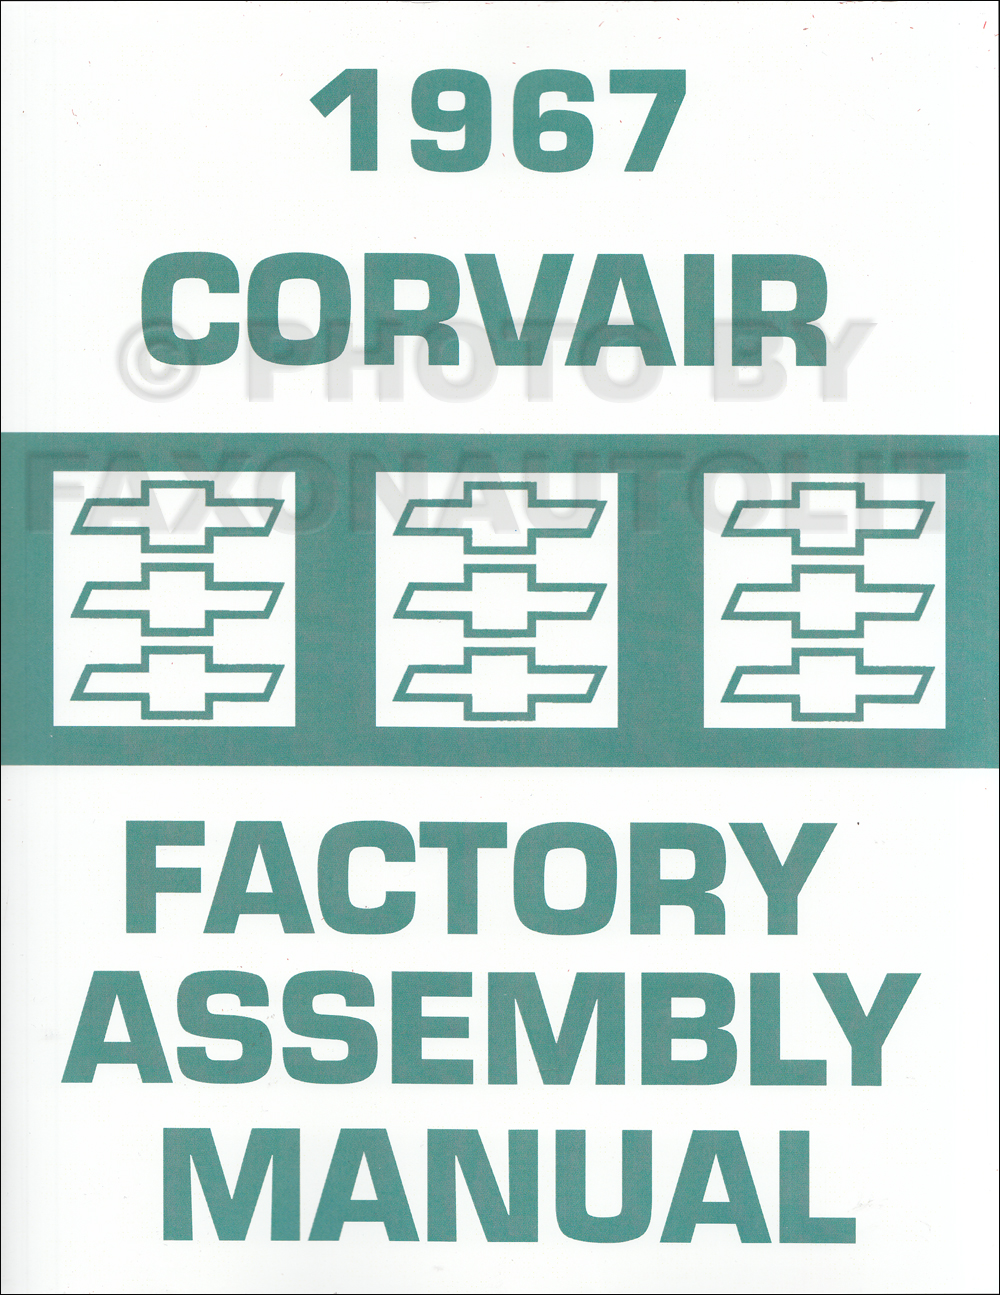 1967 Chevrolet Corvair Shop Manuals /& Parts Books CD